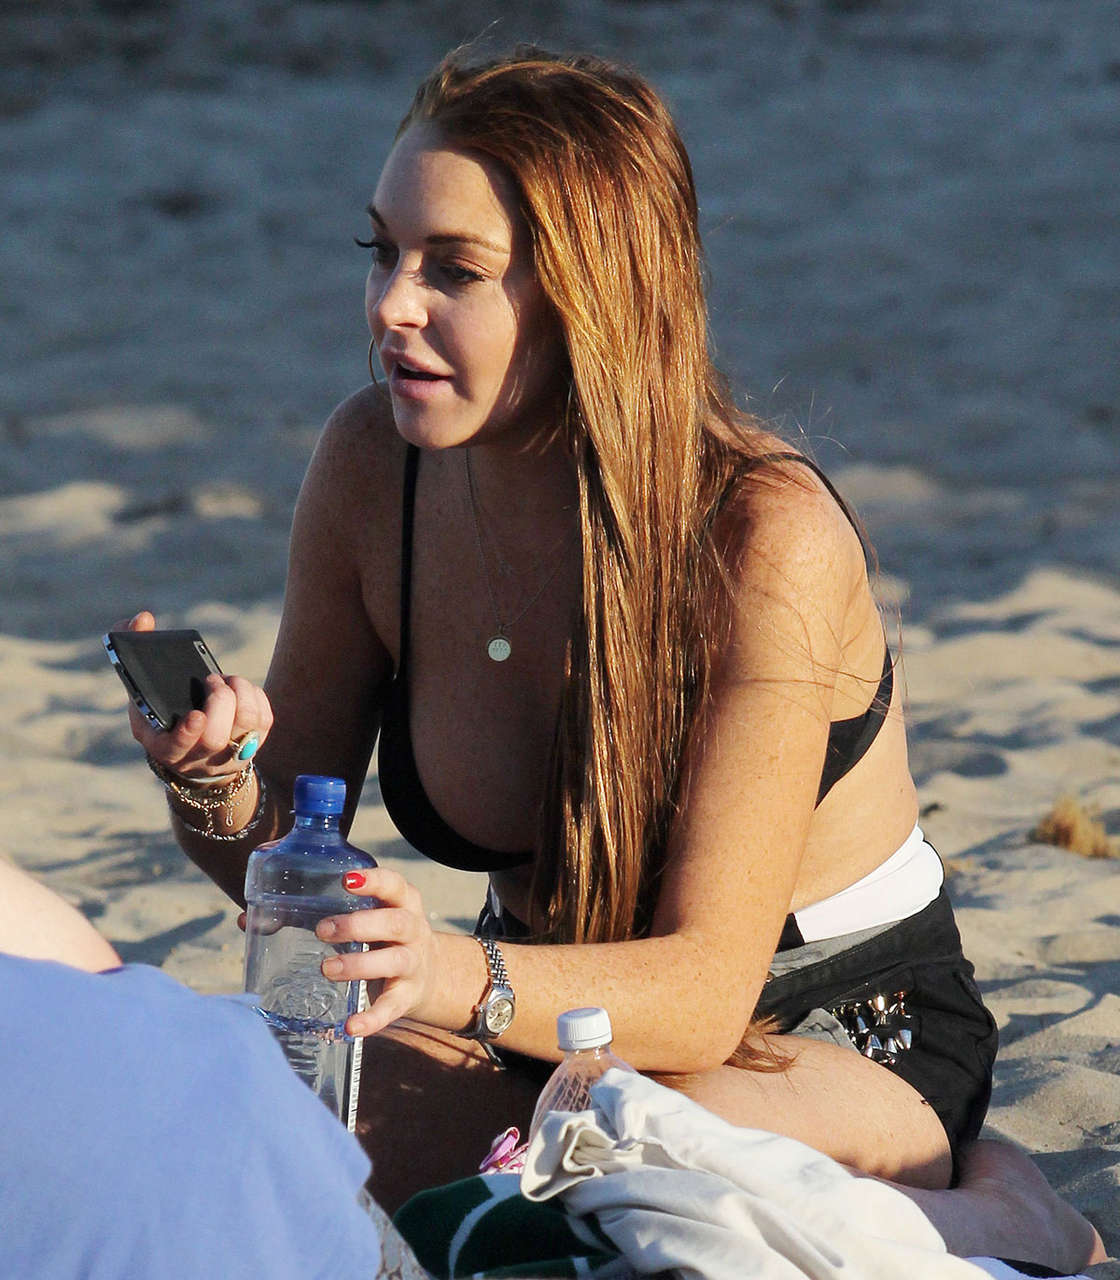 Lindsay Lohan Bikini Top Beach California